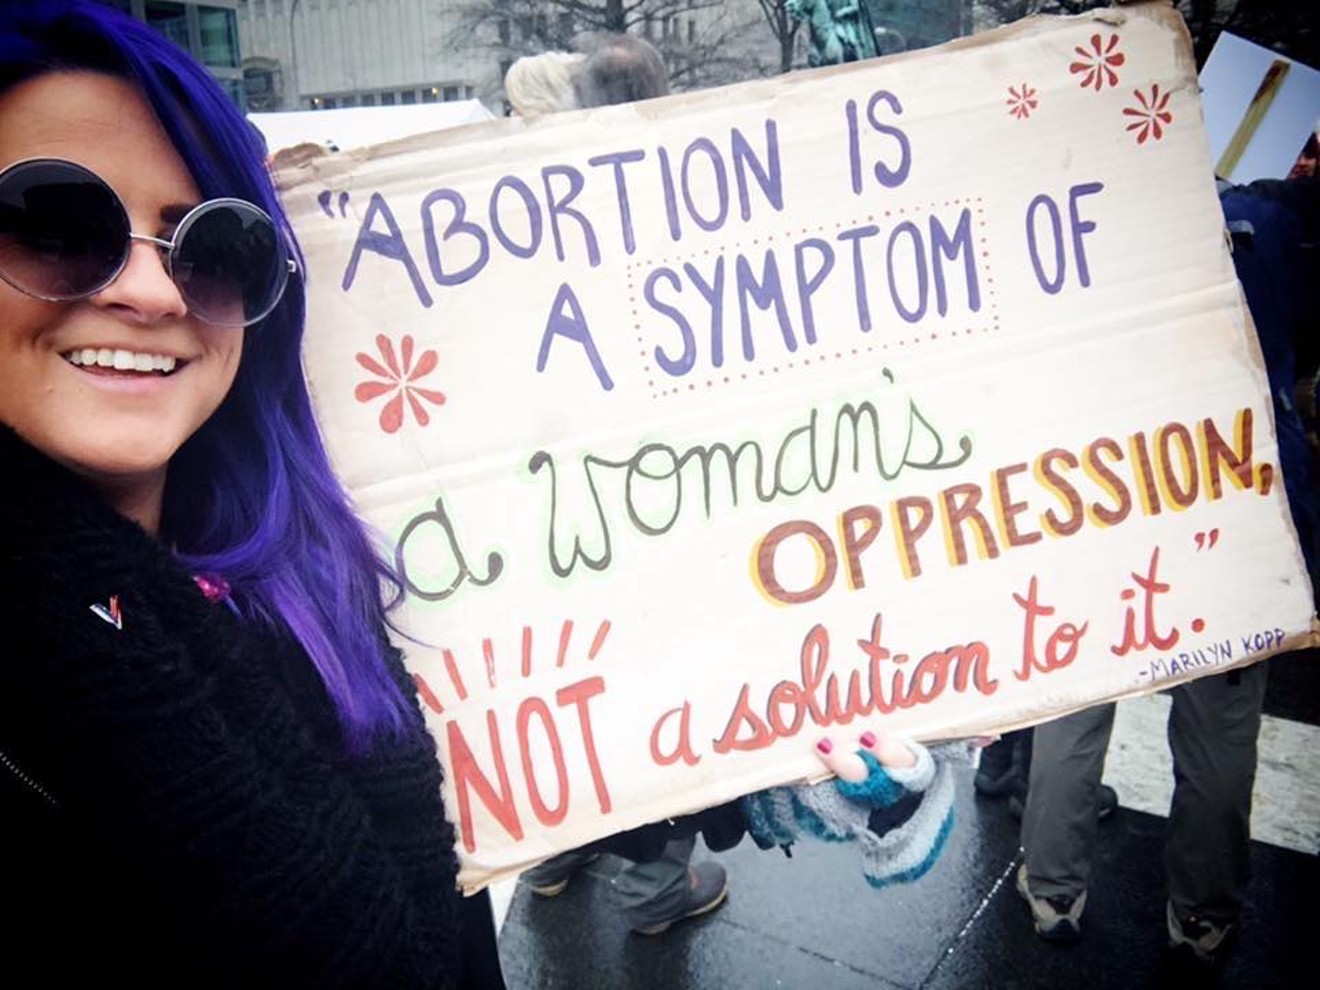 Dallas activist Destiny Herndon-De La Rosa is making (third) waves as a pro-life feminist.